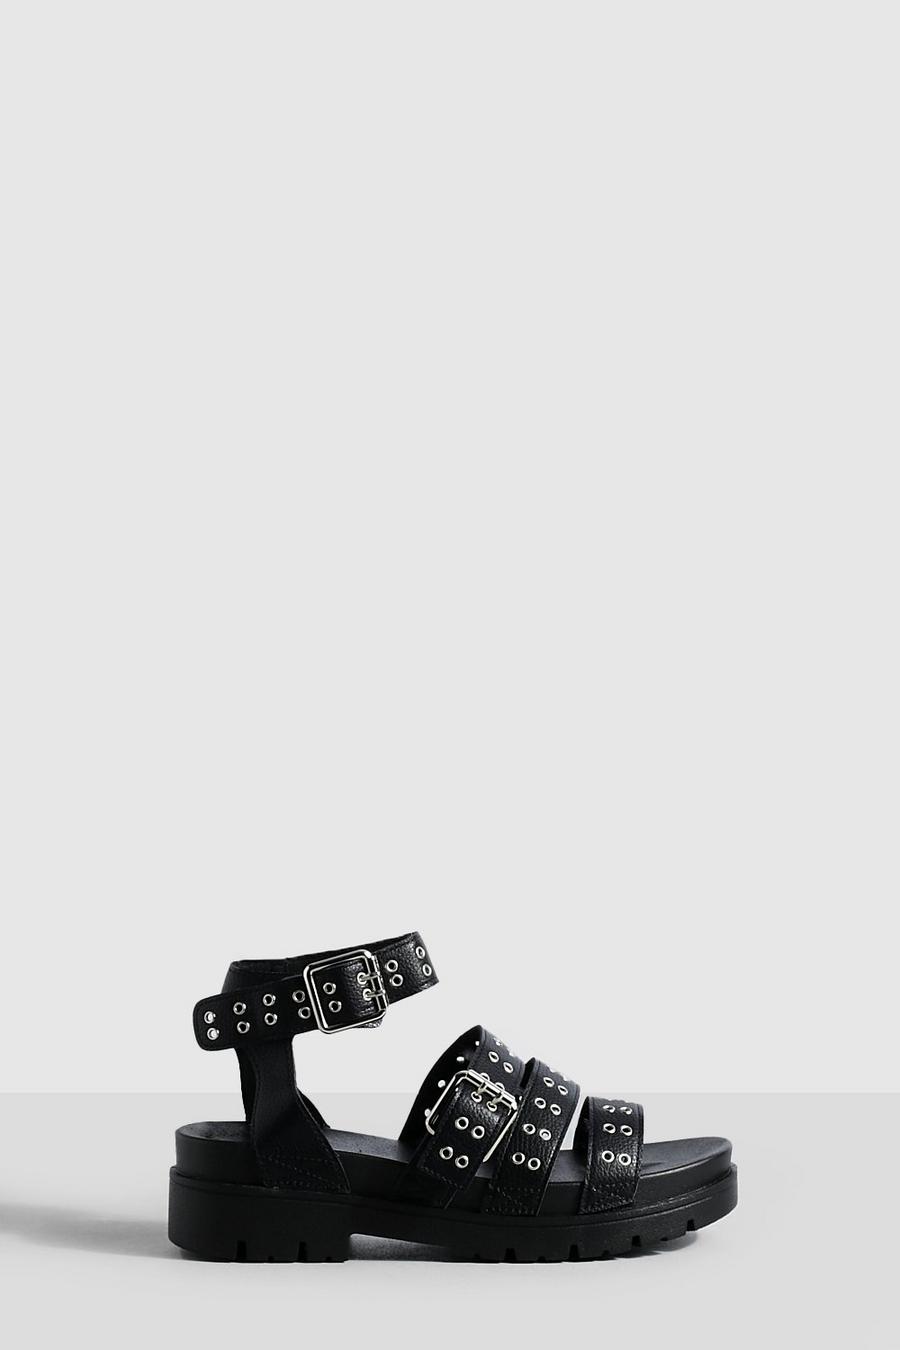 Sandalias de plataforma gruesas con tres tiras y tachuelas, Black